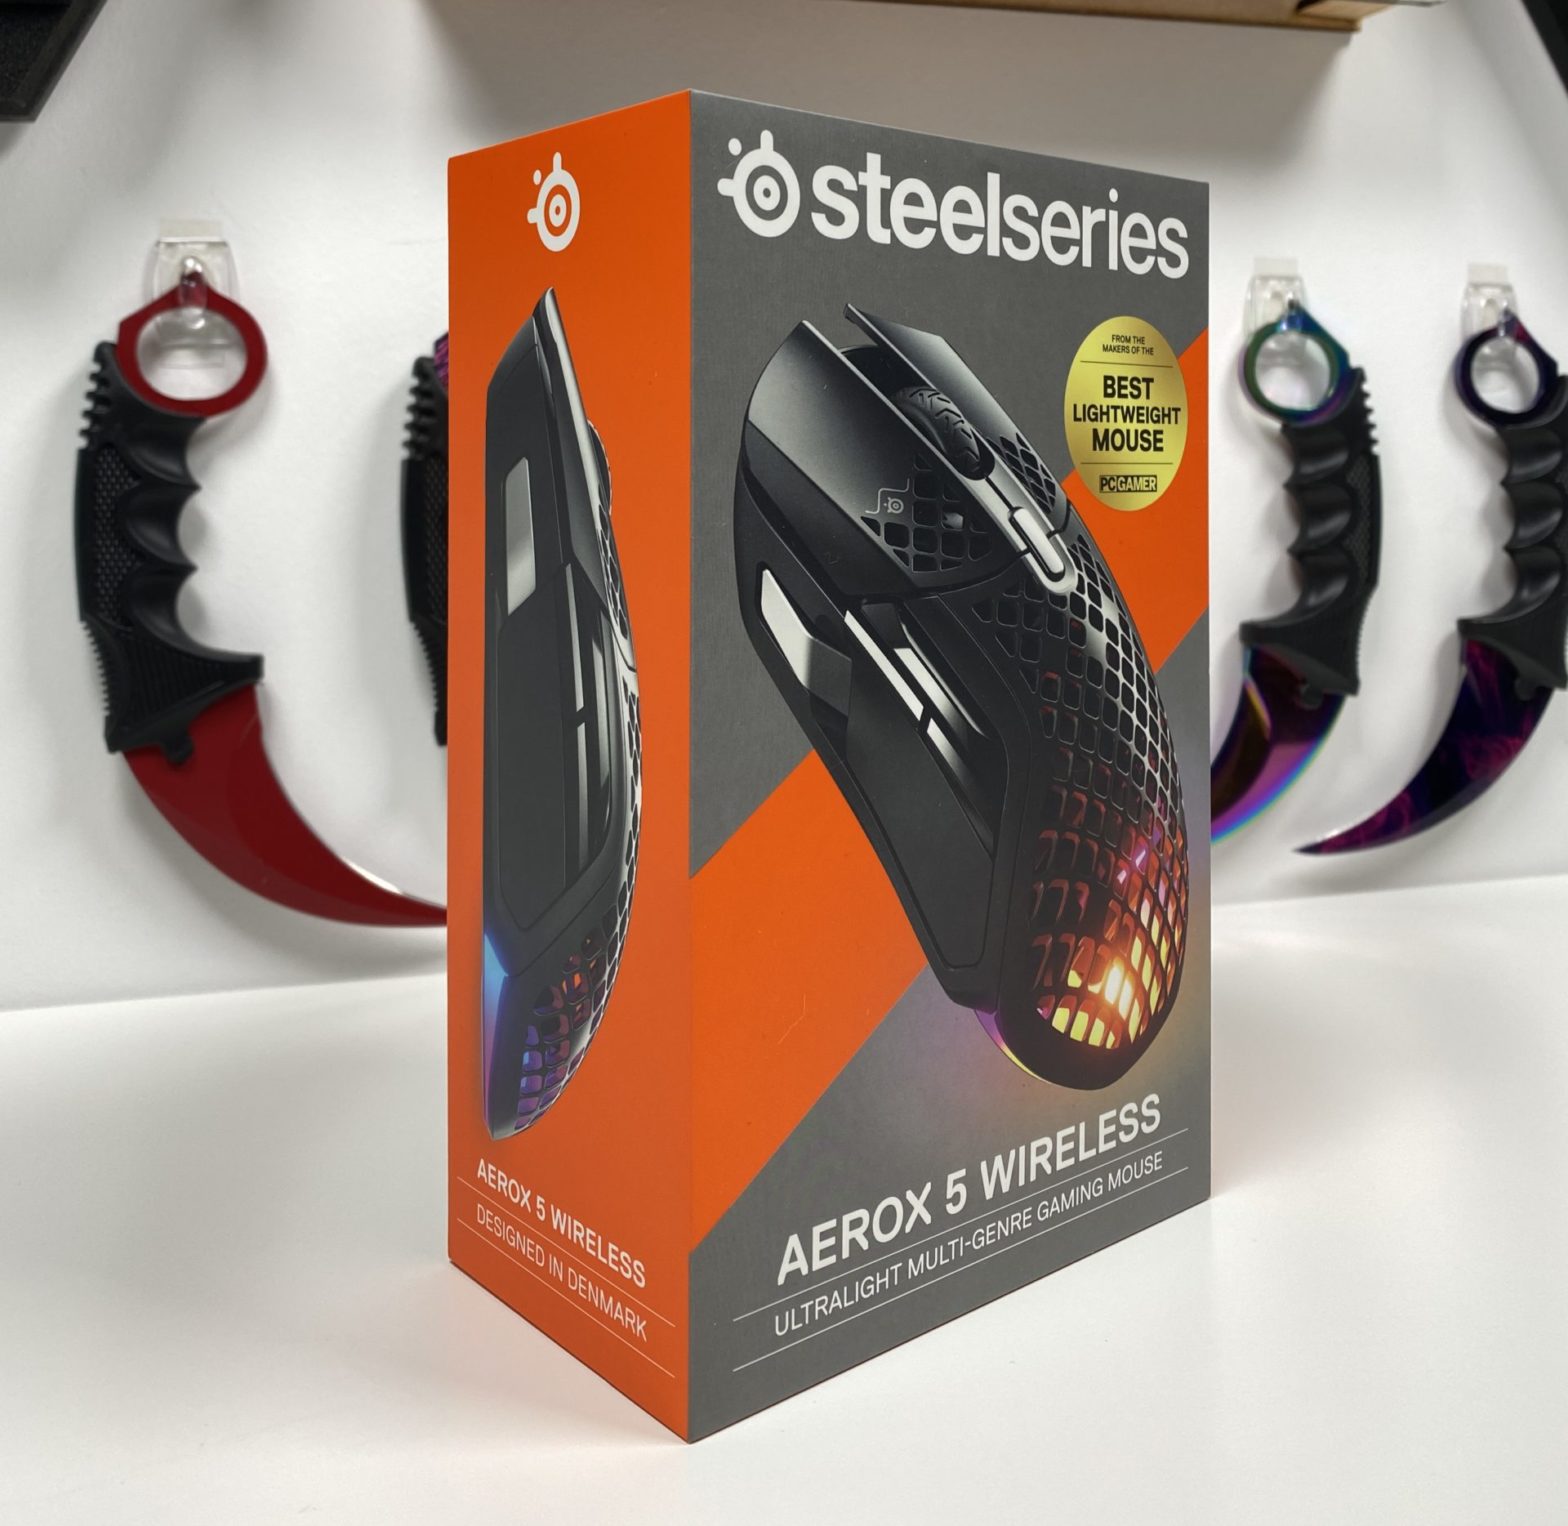 SteelSeries Aerox 5 Wireless feature image